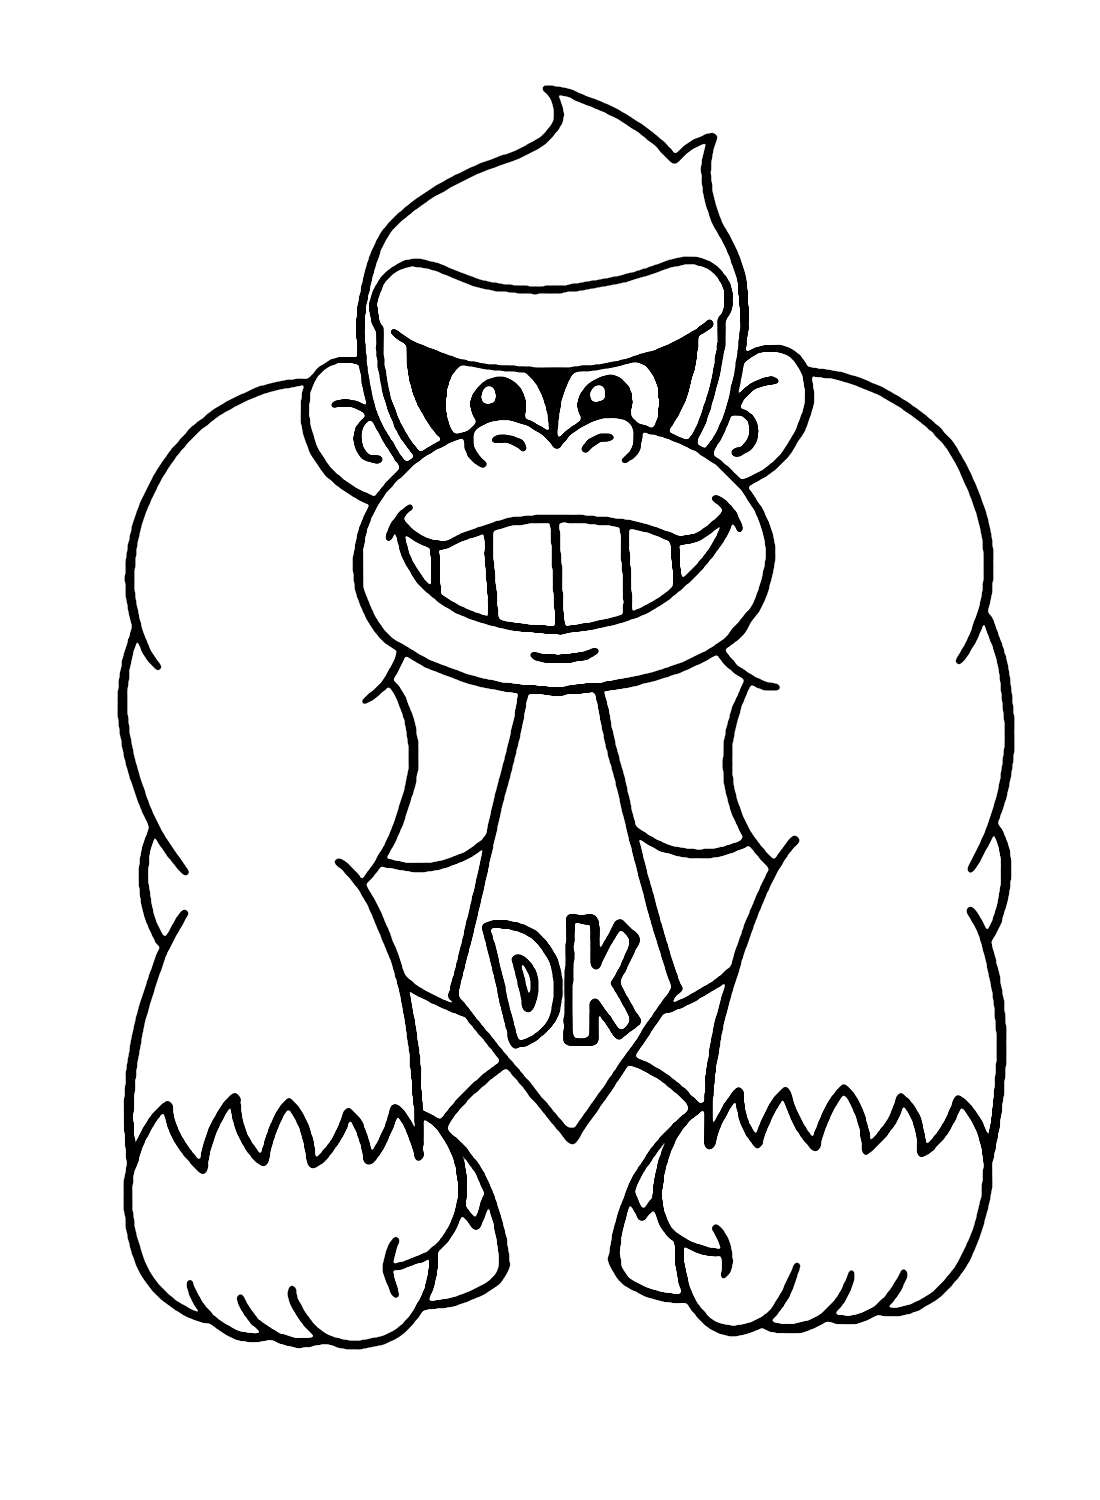 Lindo Donkey Kong de Donkey Kong